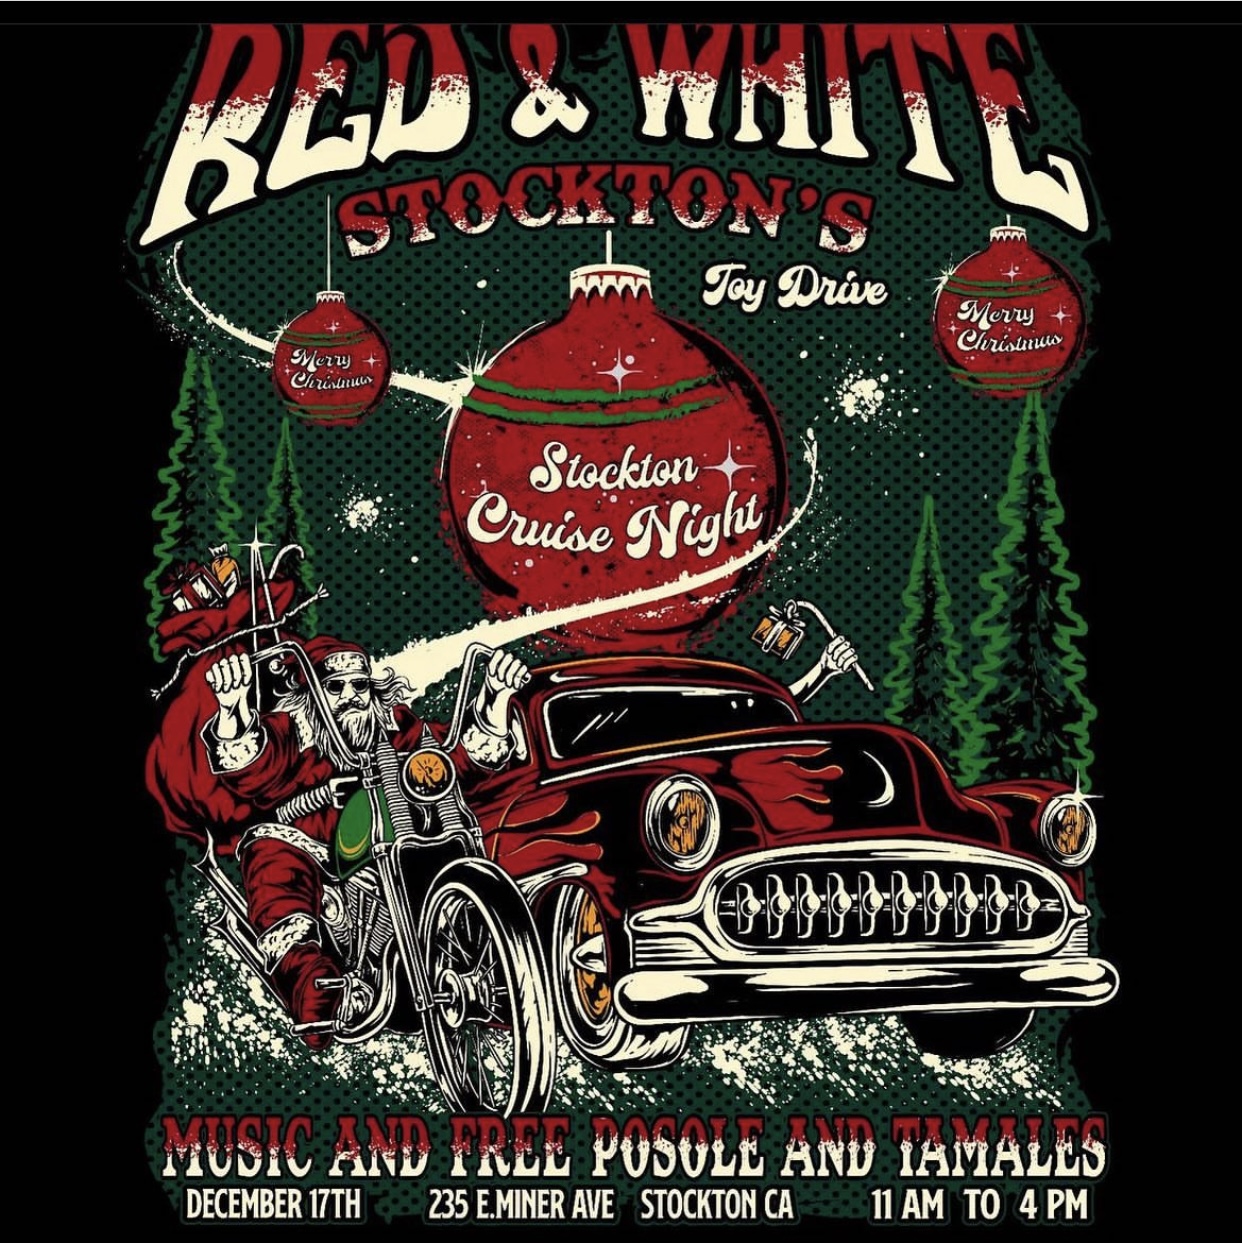 Red & White Stockton's Toy Drive